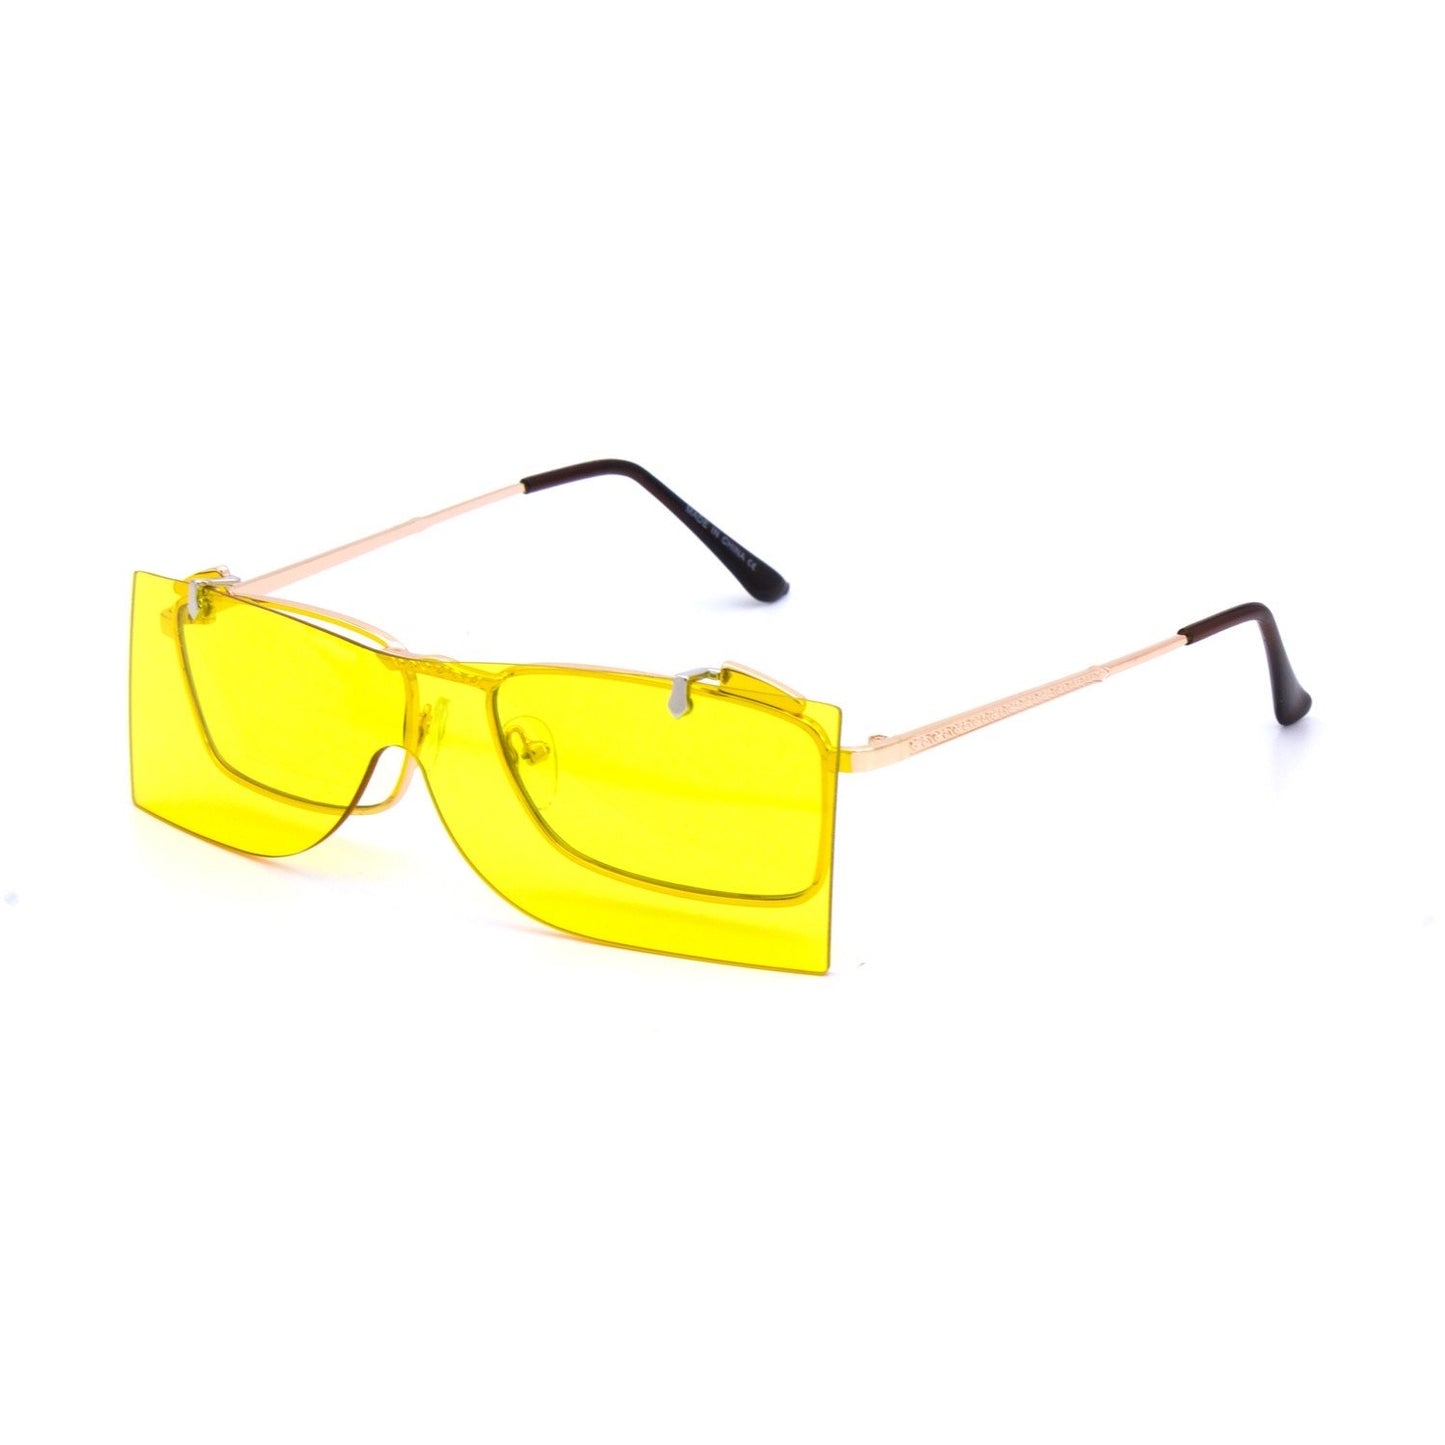 “BAD GIRLS” Rimless Sunglasses - Weekend Shade Sunglasses